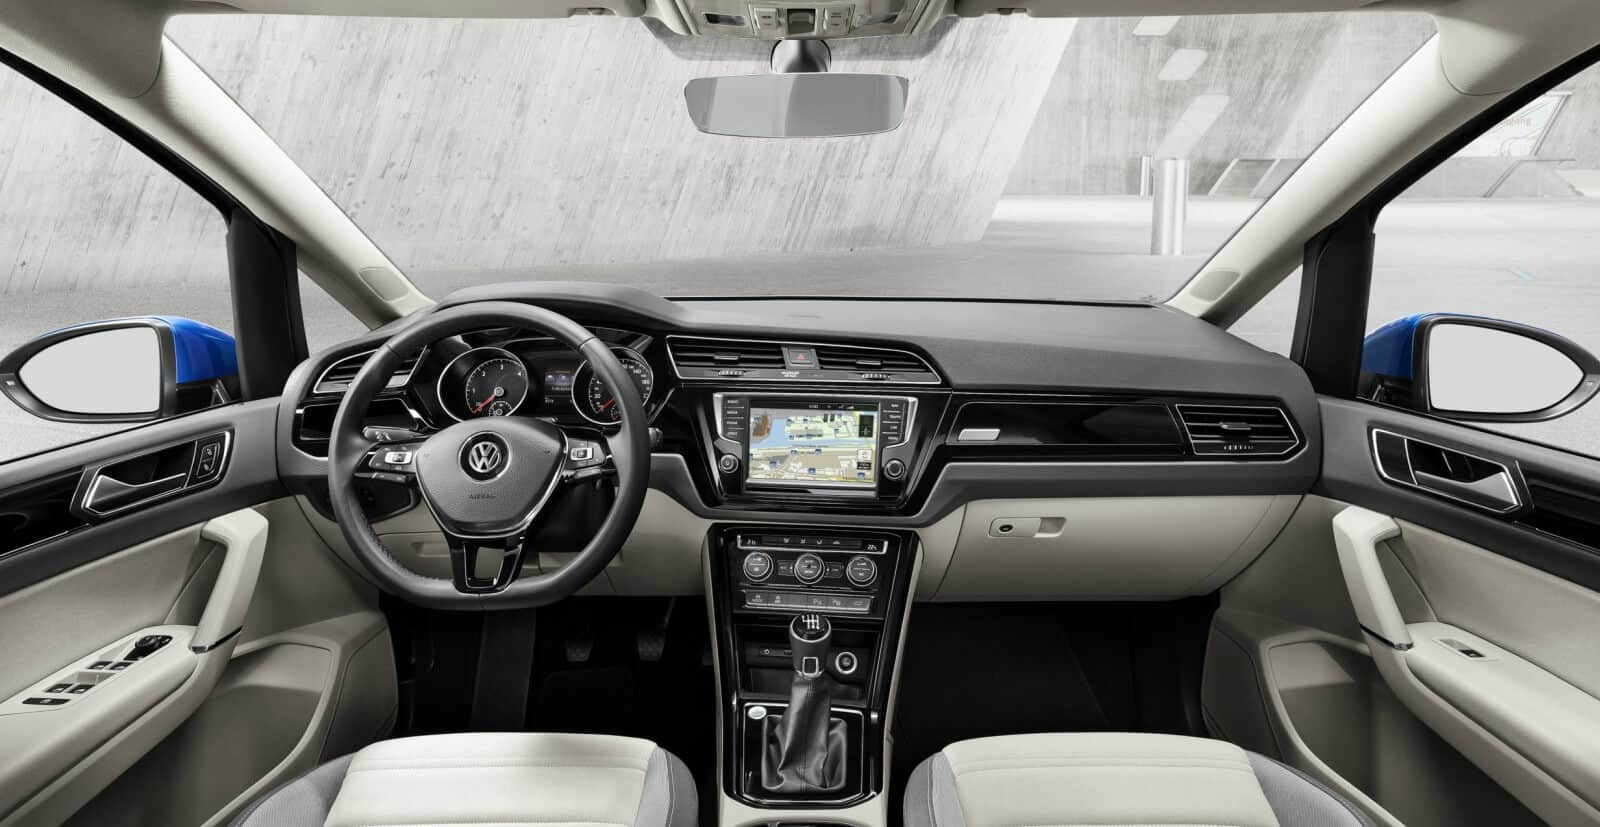 Volkswagen Touran interior - Cockpit